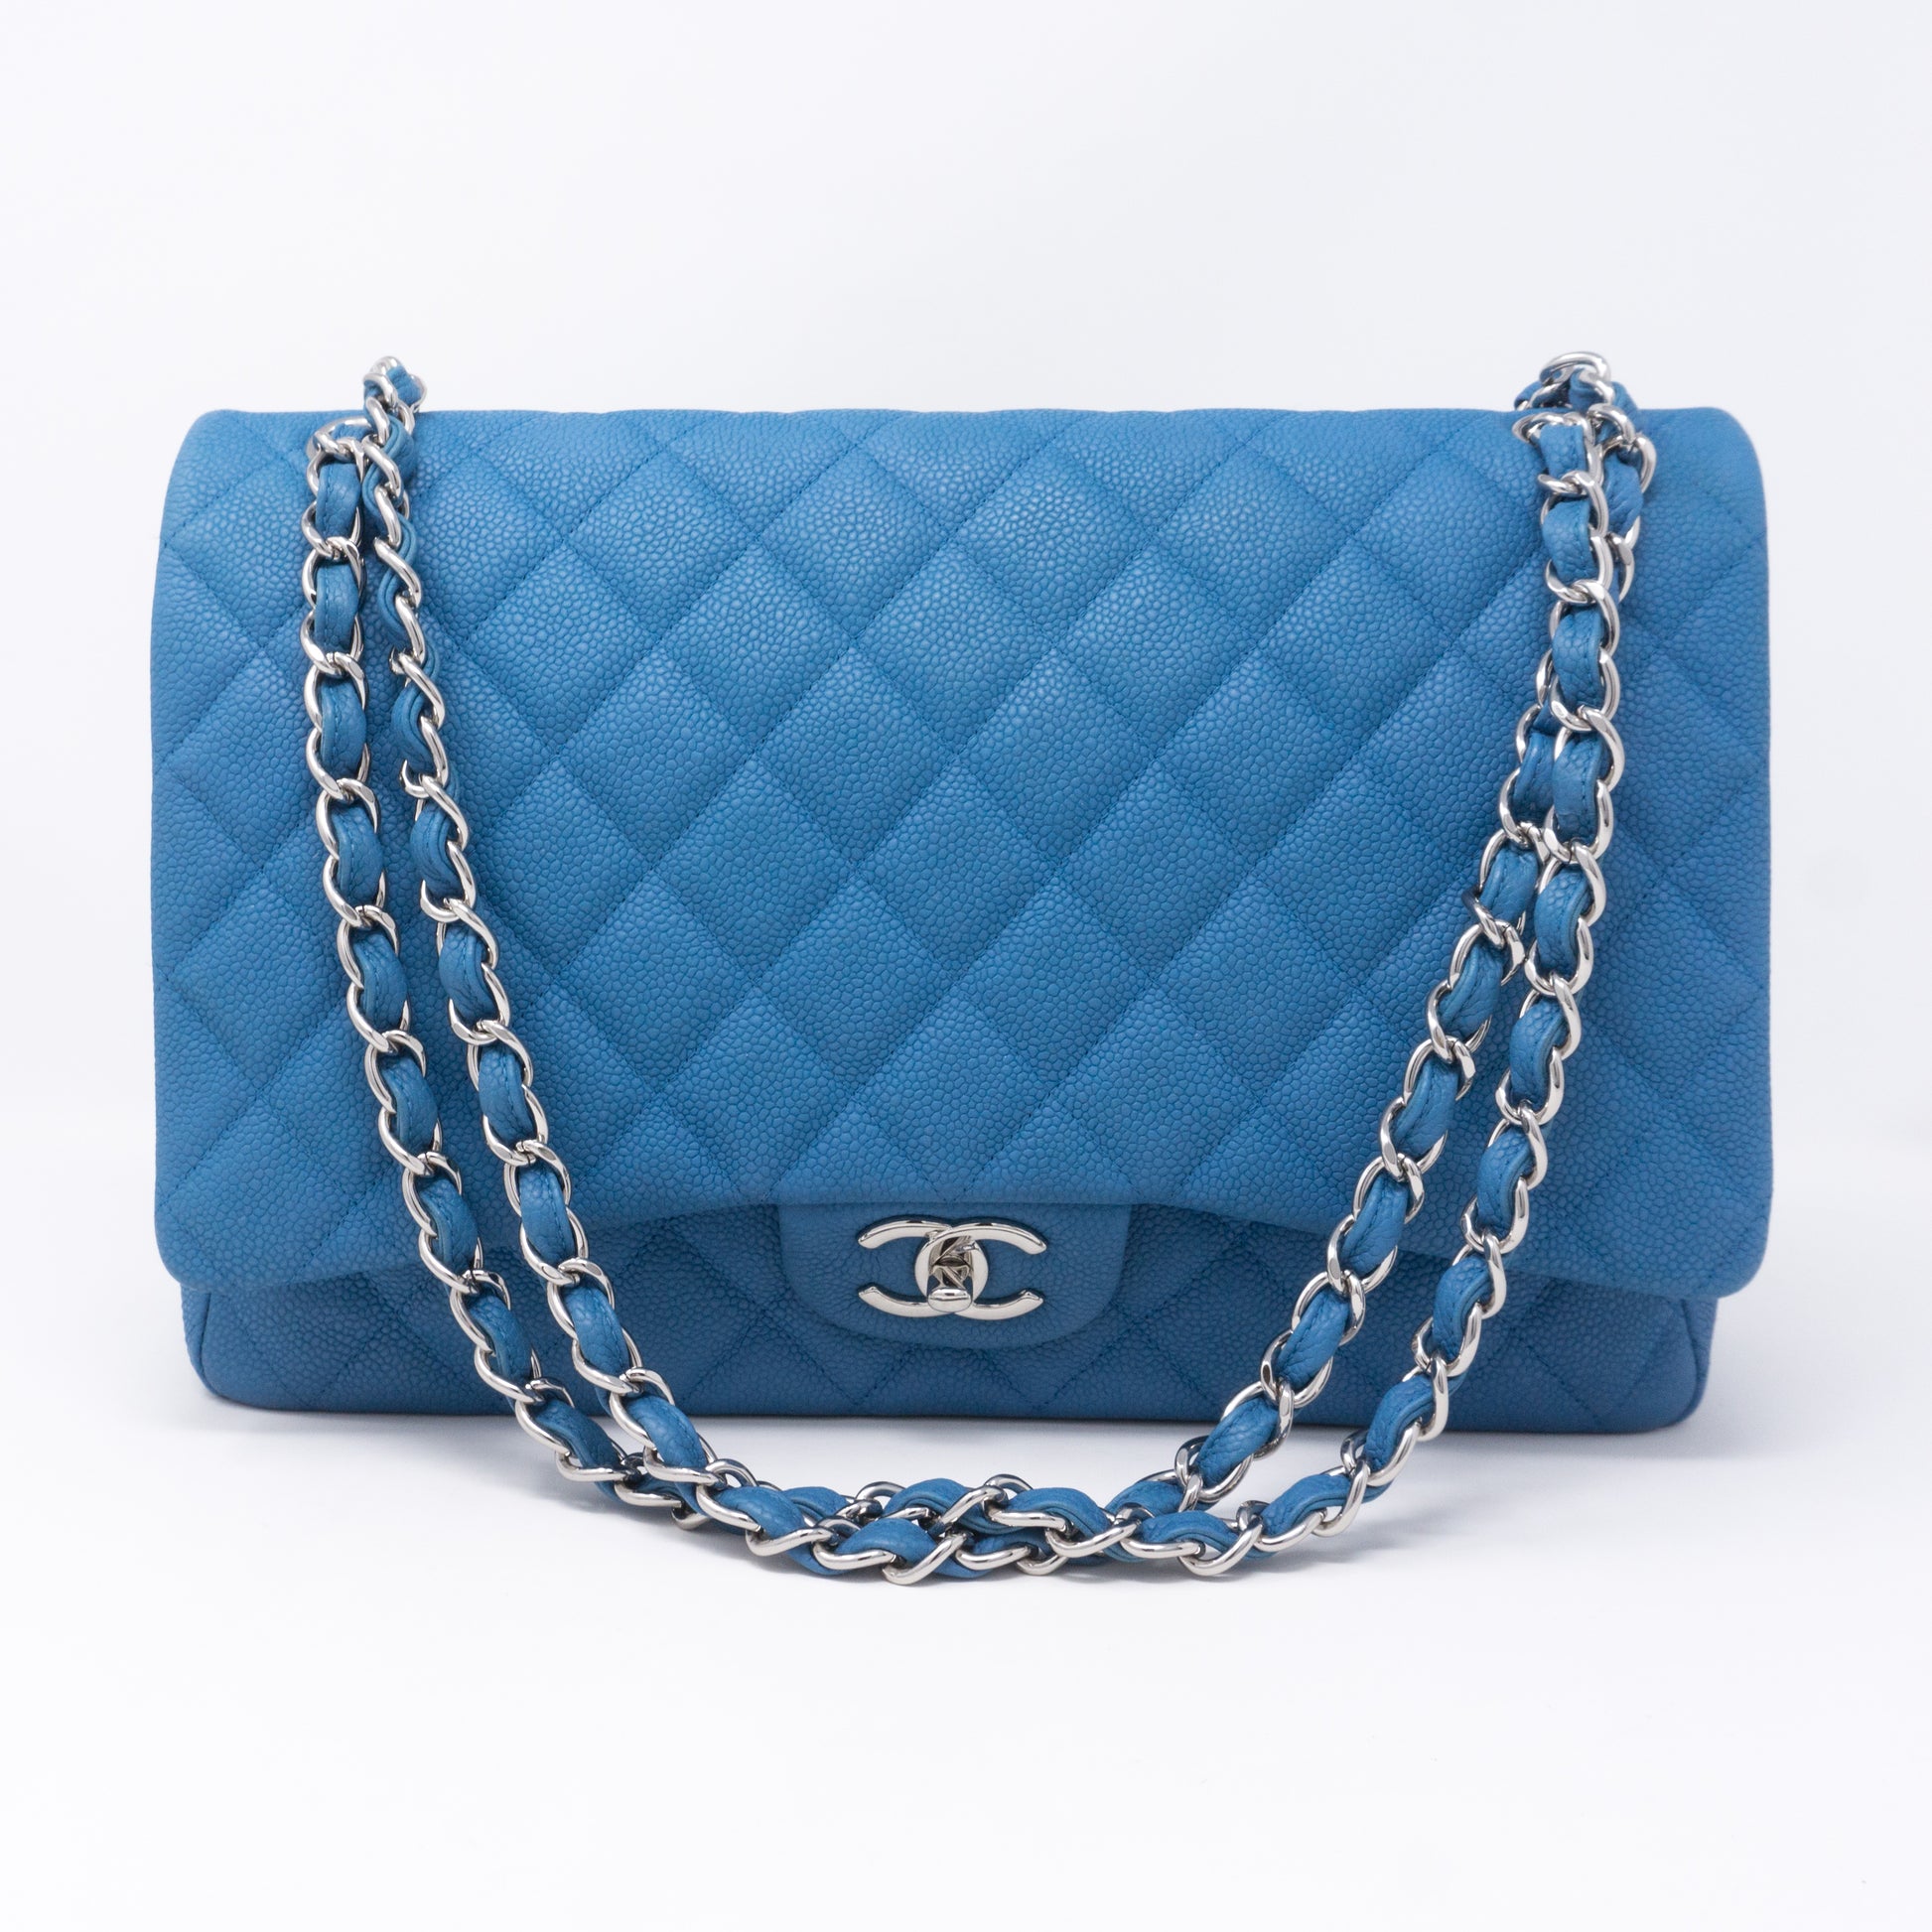 Chanel – Classic Double Flap Maxi Blue Matte Caviar Leather